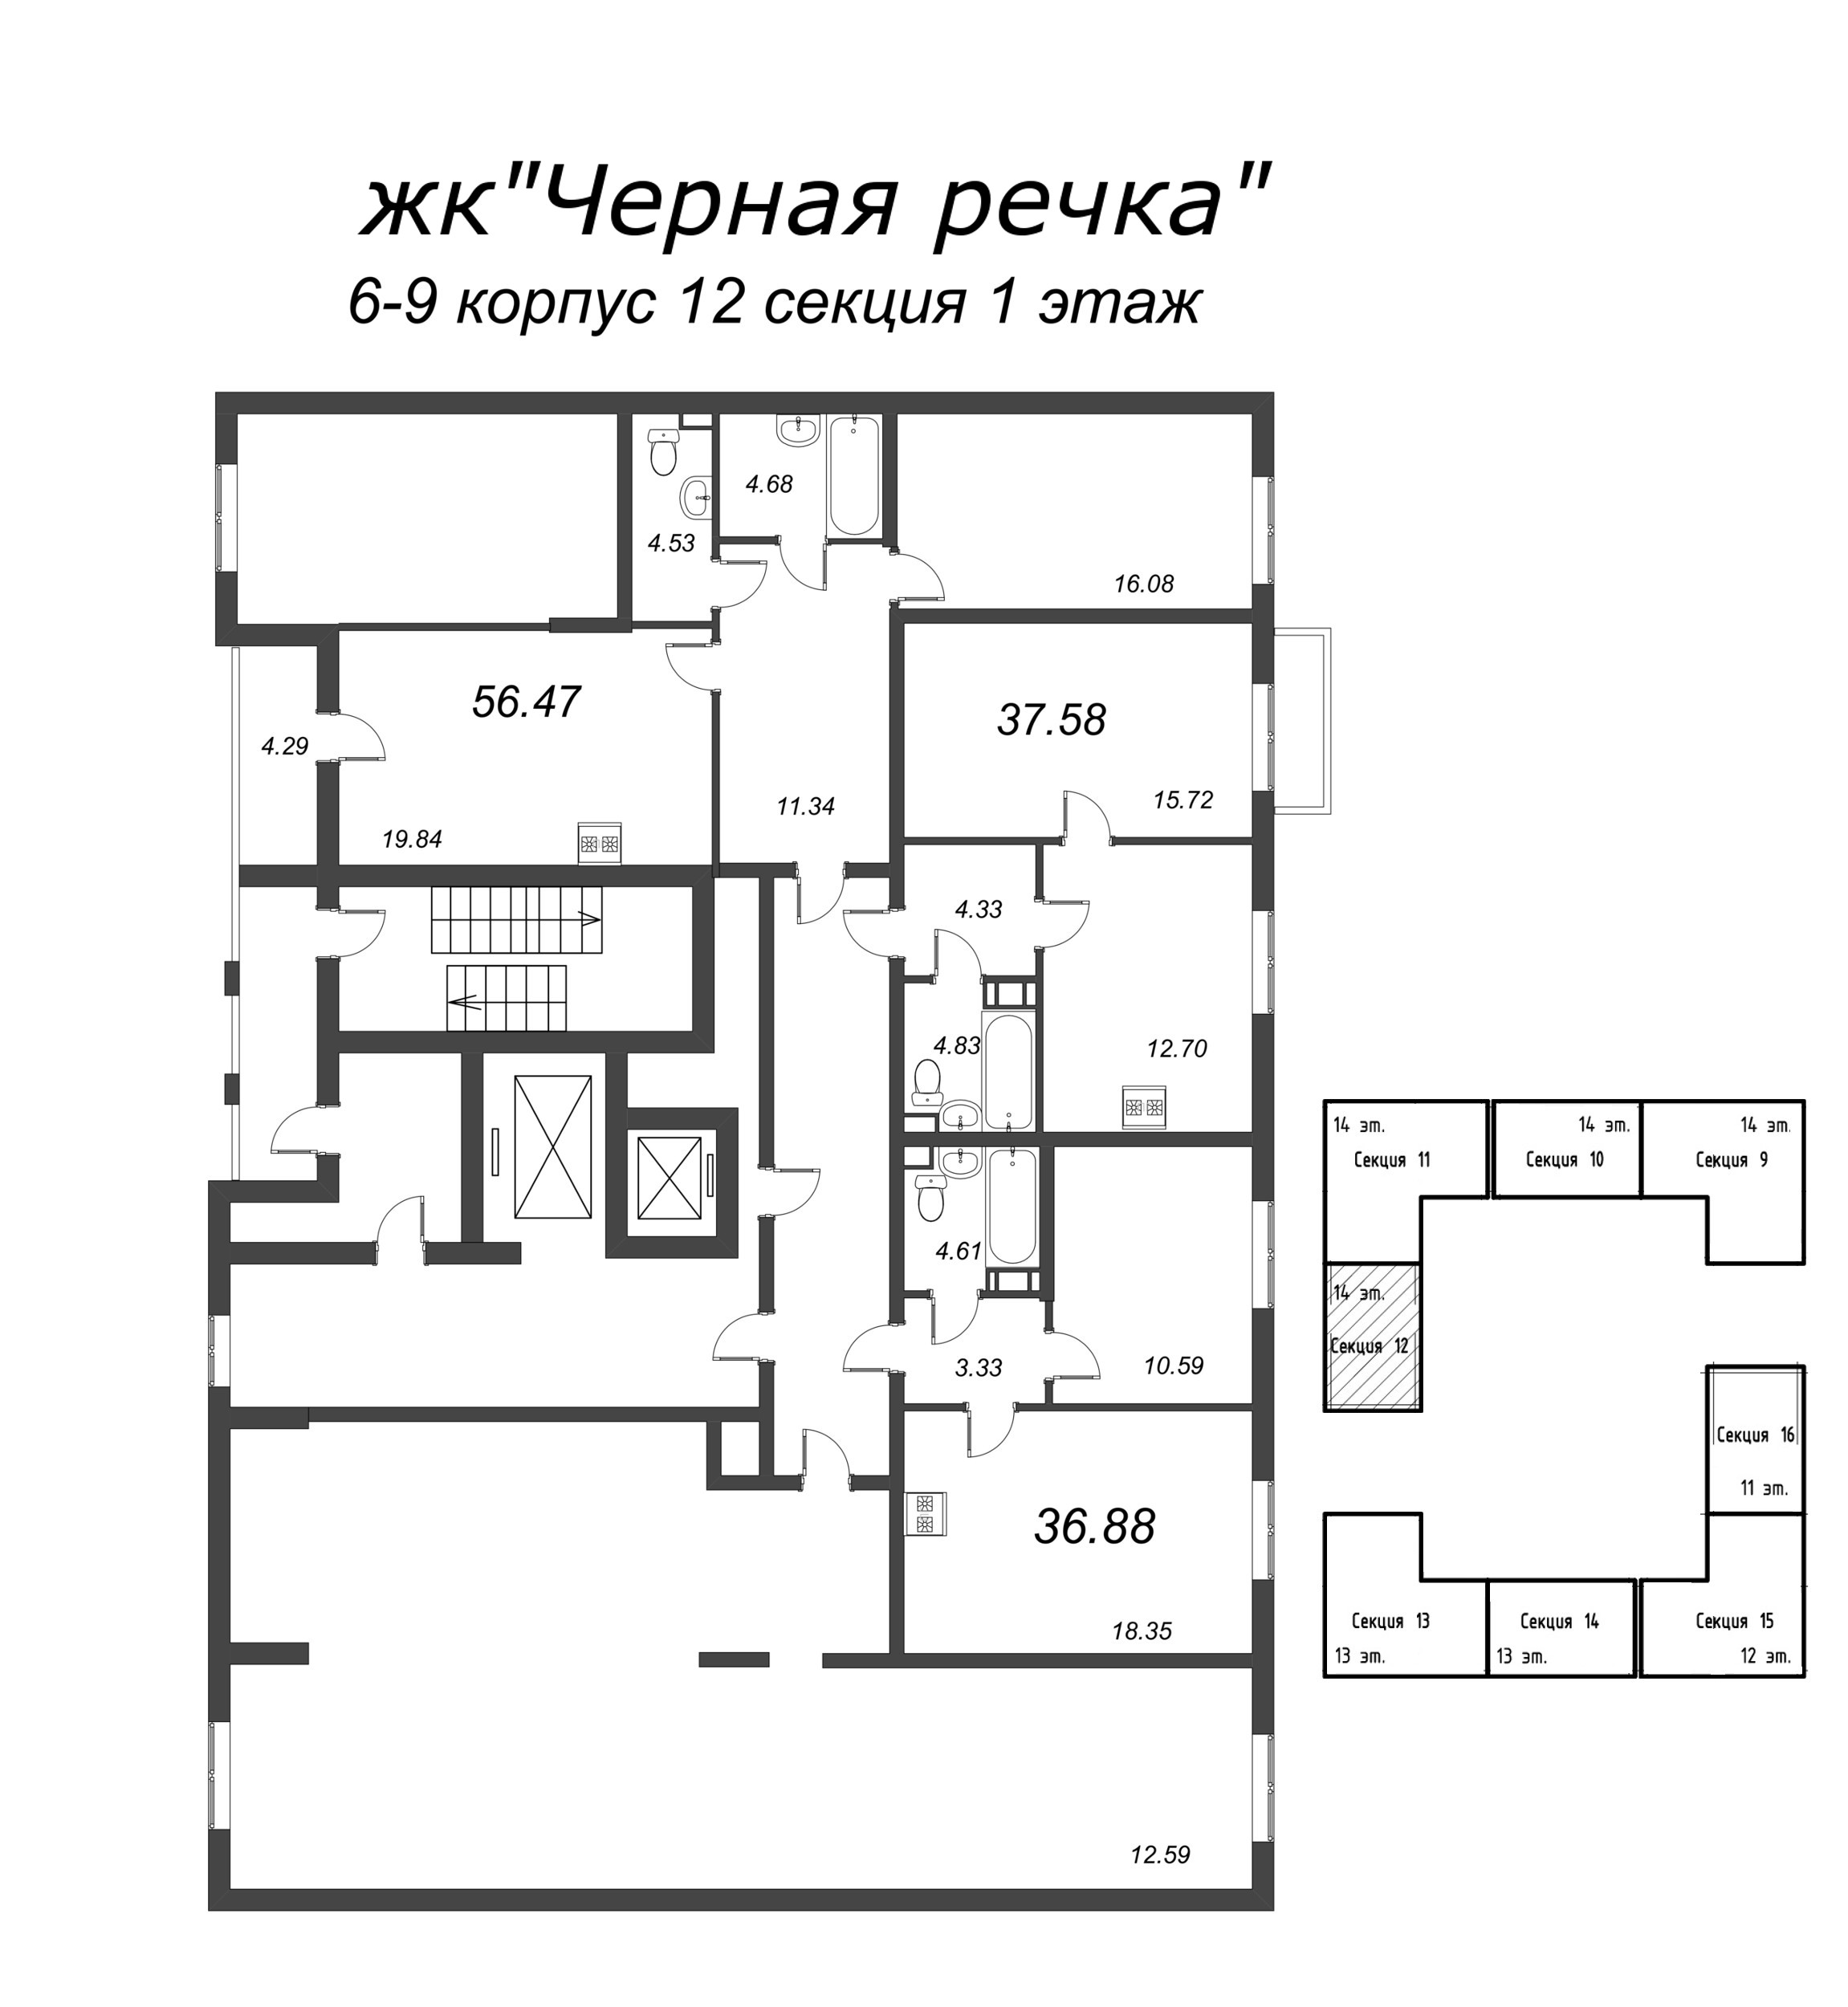 2-комнатная (Евро) квартира, 36.88 м² - планировка этажа